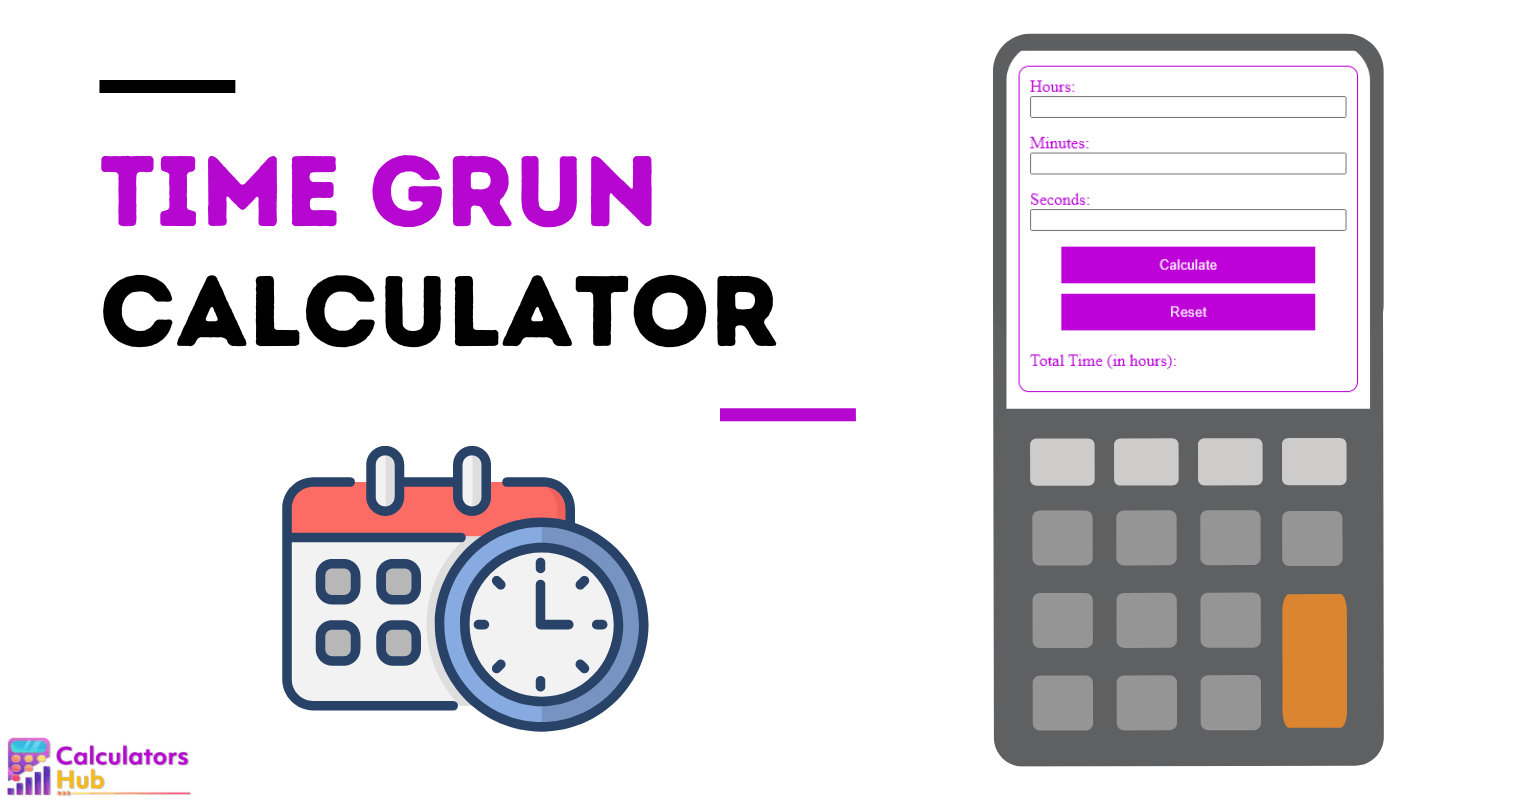 Time Calculator GRUN